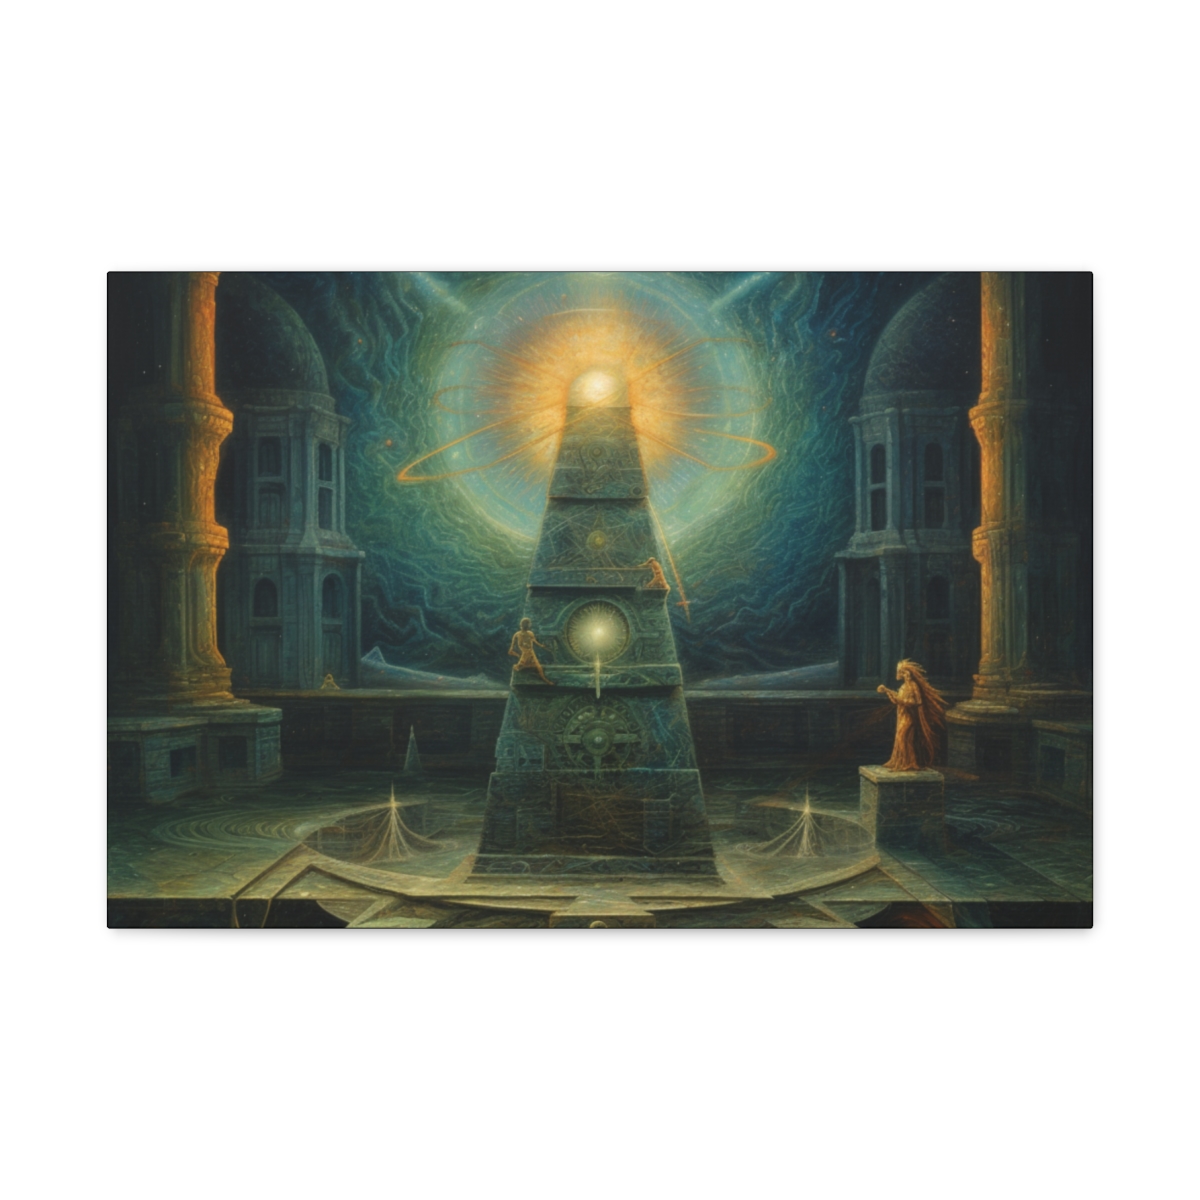 DMT Art Print: The Sacred Temple